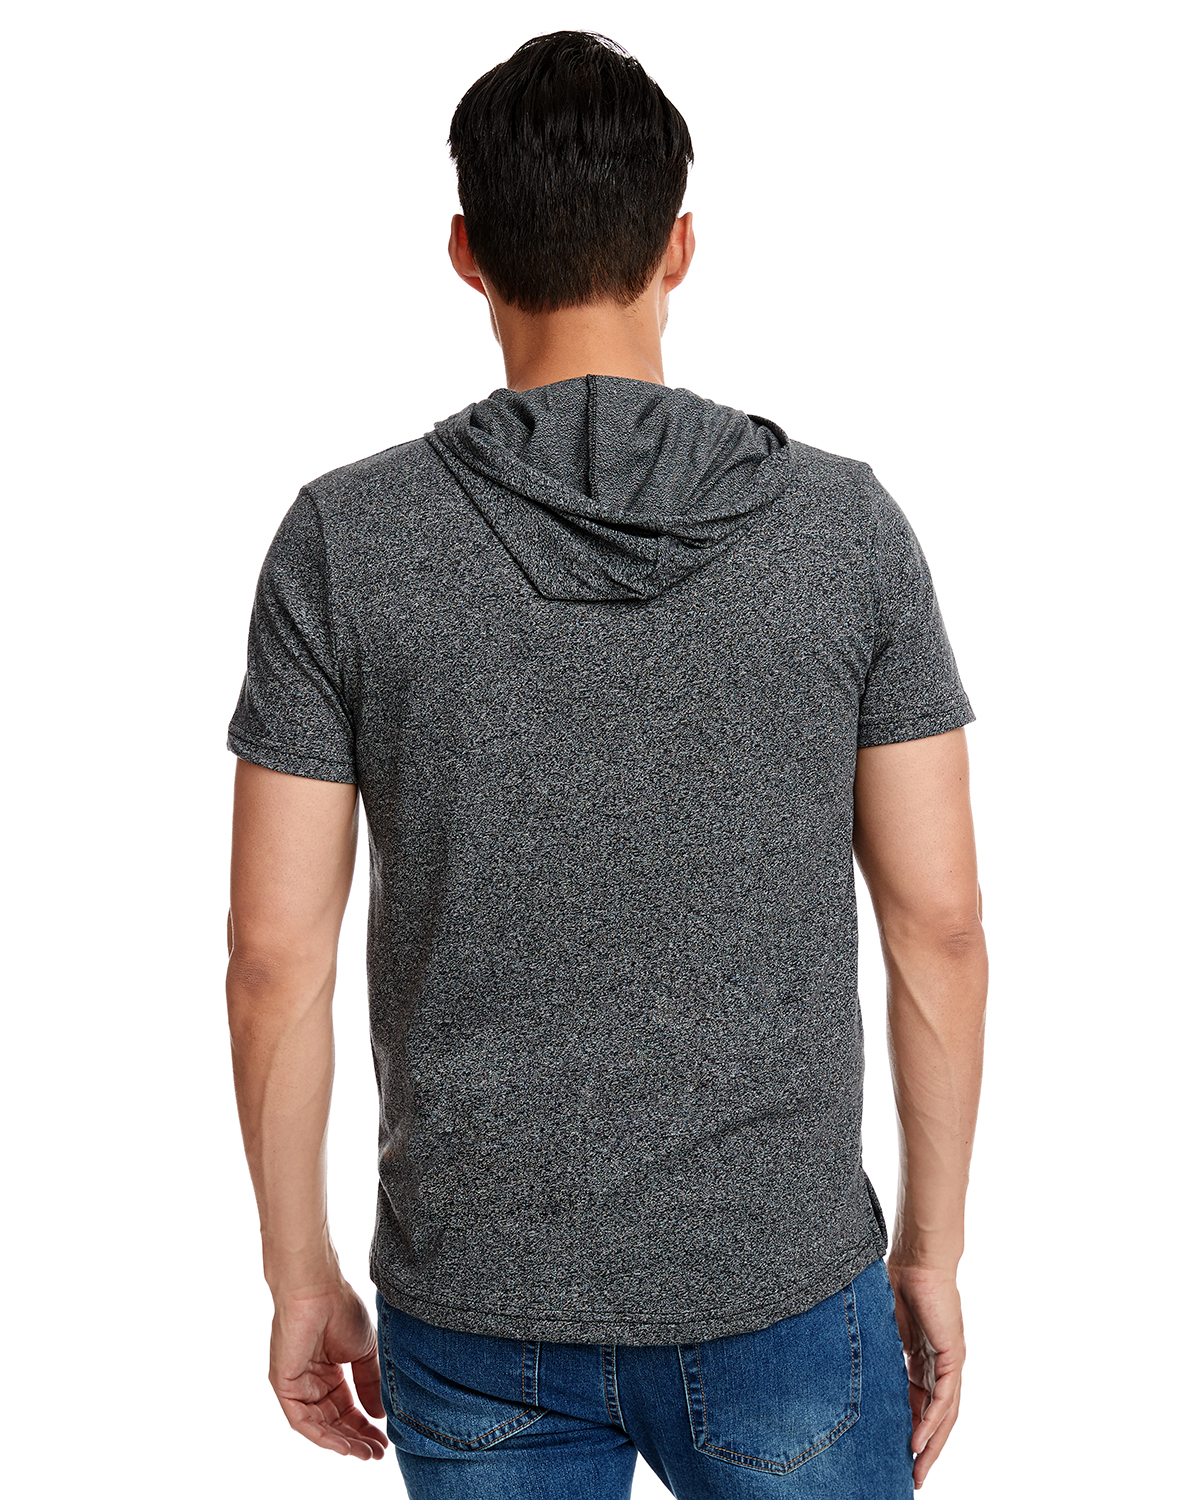 Next Level 2022 | Unisex Mock Twist Short Sleeve Hoody T-Shirt | ShirtSpace